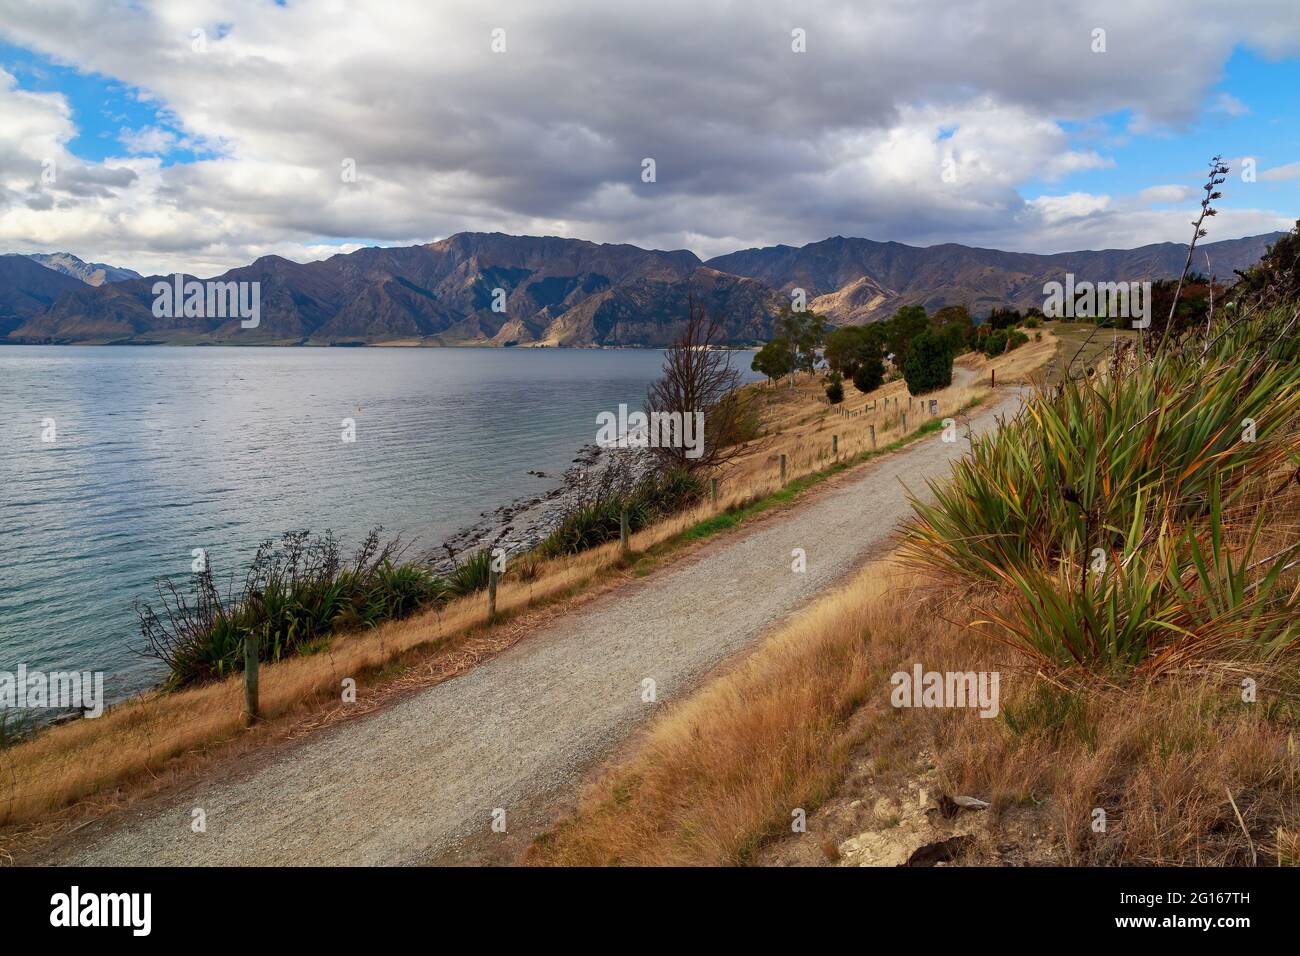 Lake Hawea in the Otago region of New Zealand's South Island. A gravel road runs along the shoreline Stock Photo